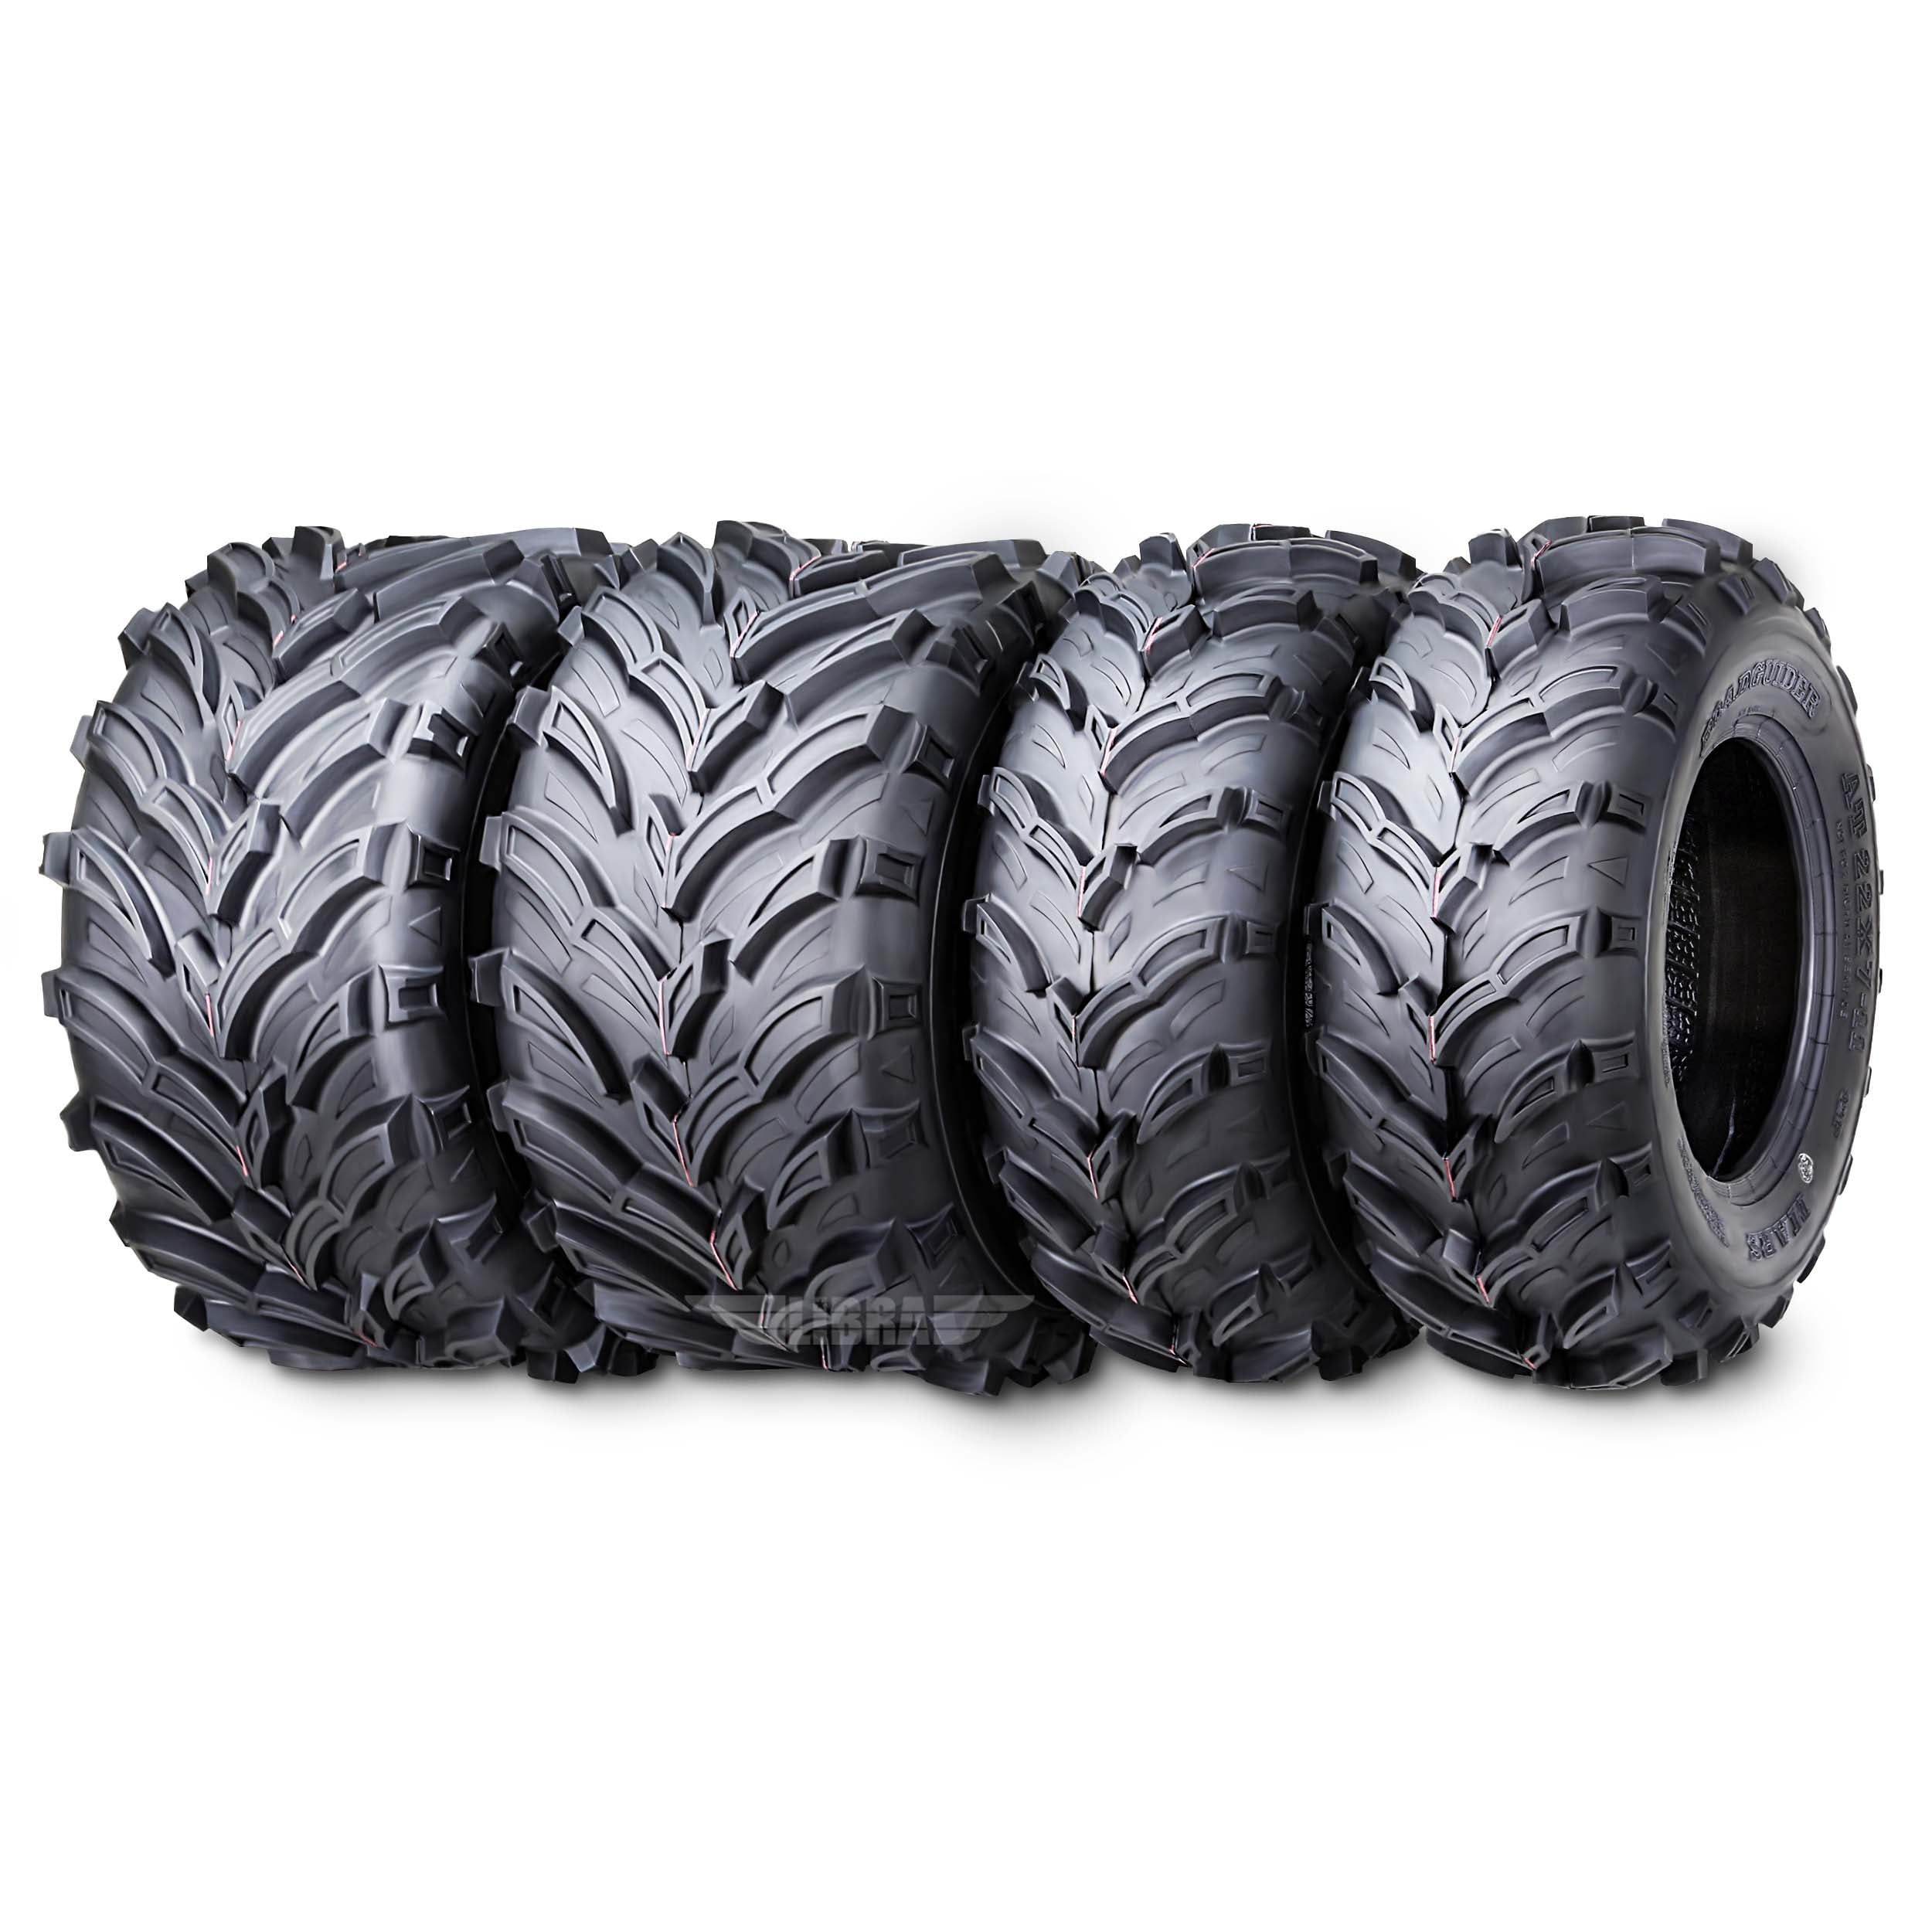 New 2 Pack of 16x8.00-7 MASSFX ATV/ATC Tires Tire 16x8-7 16/8-7 16x8x7 